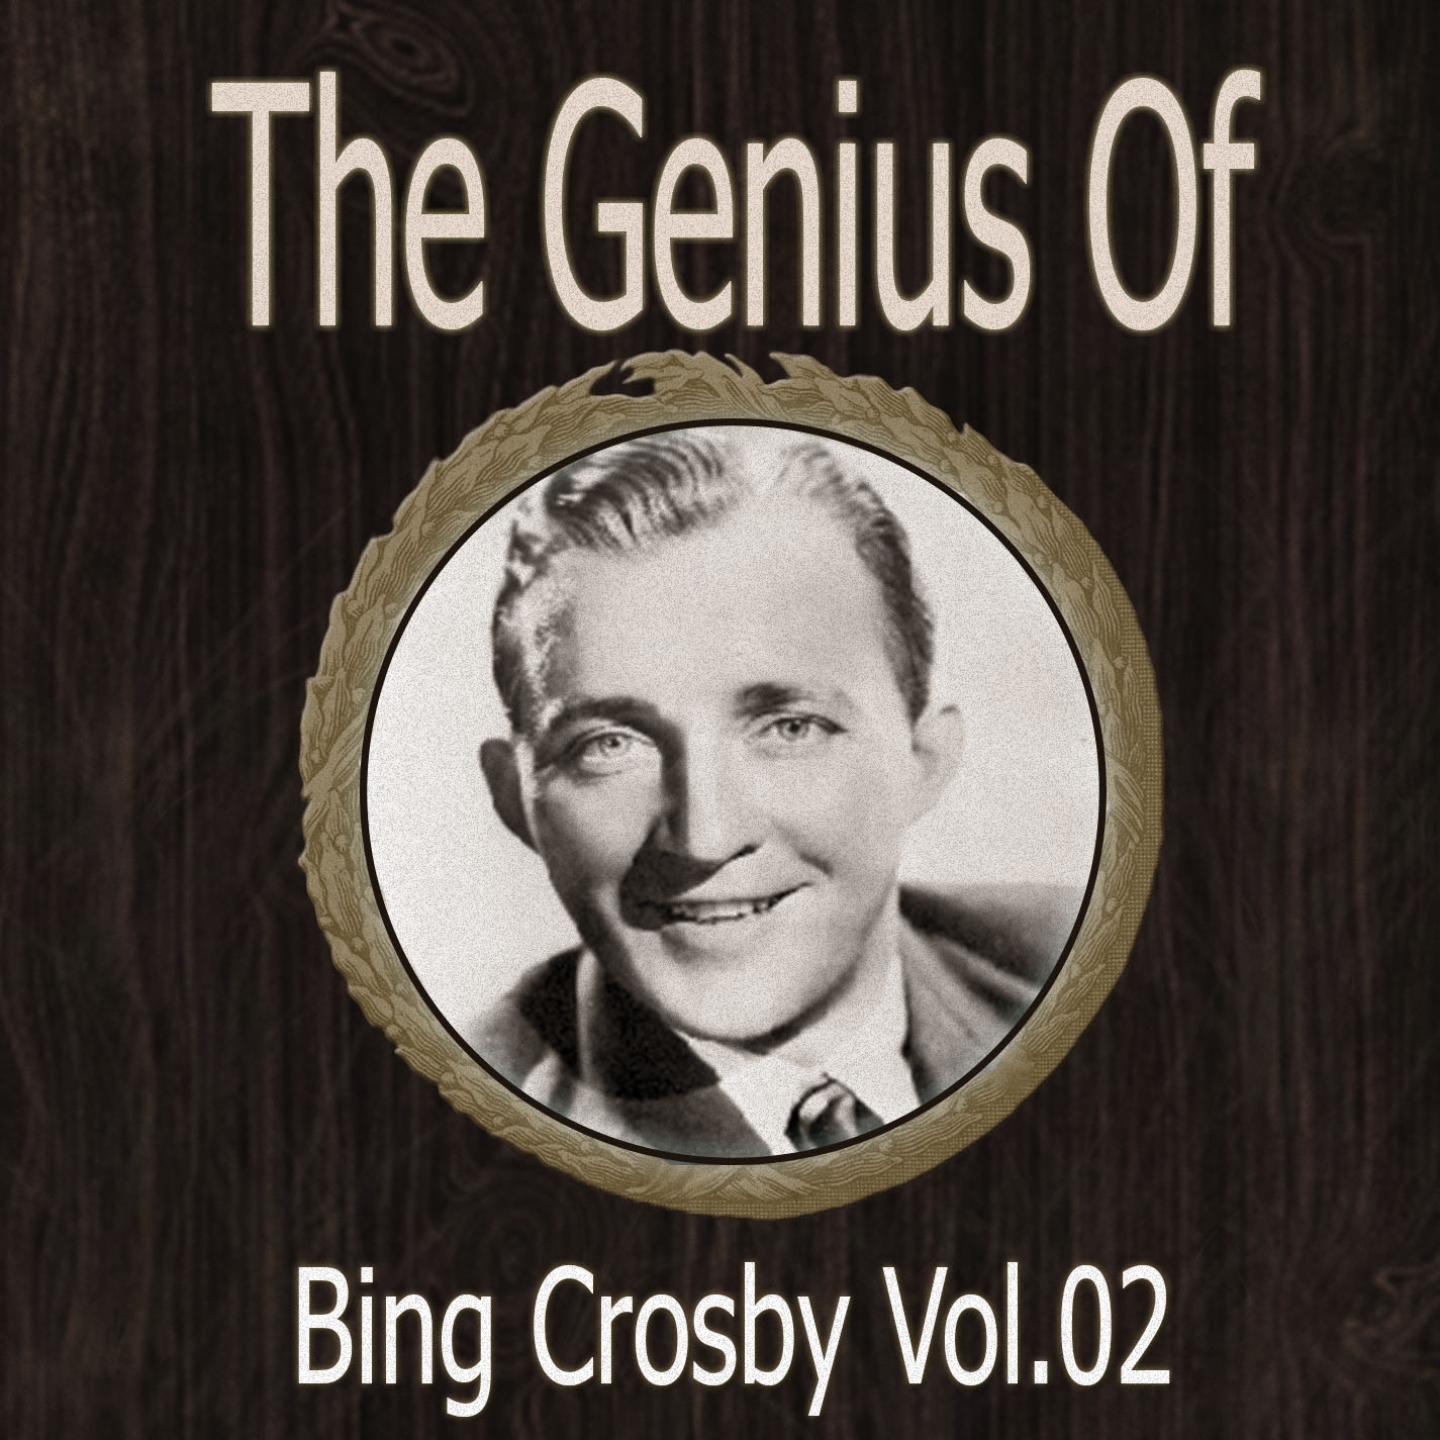 The Genius of Bing Crosby Vol 02